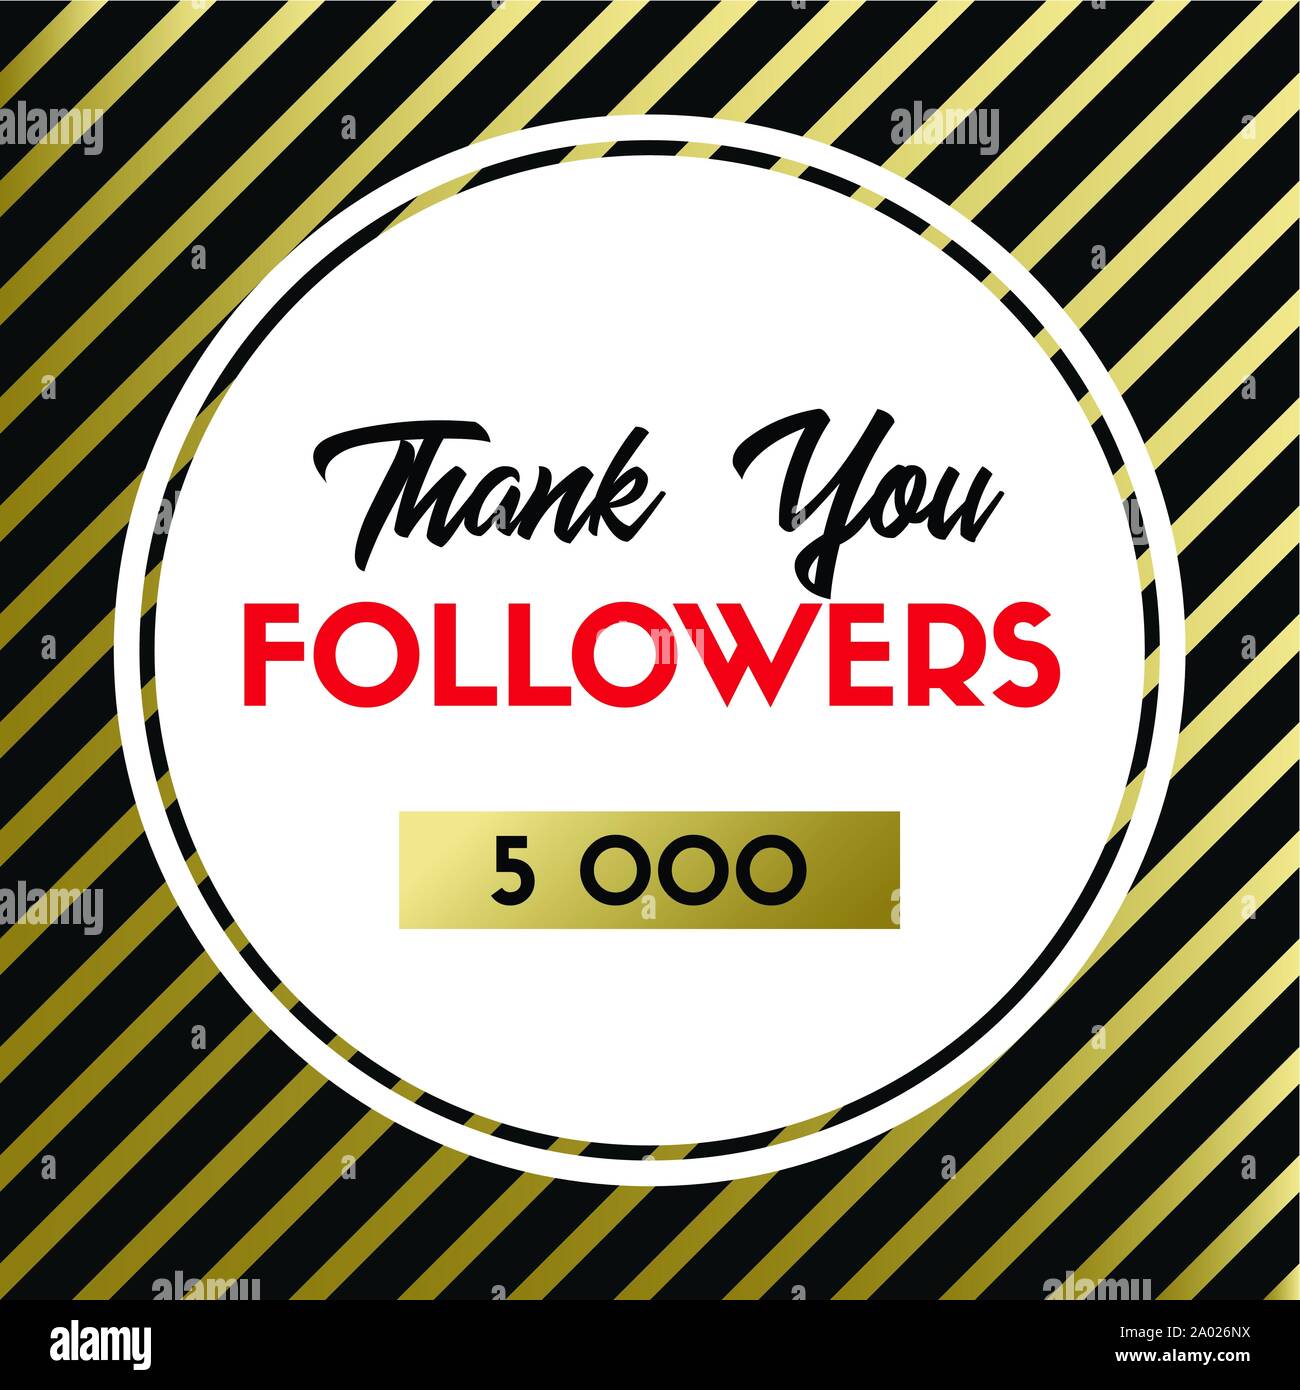 Thank you 5000 followers. Card for social media Stock Vector